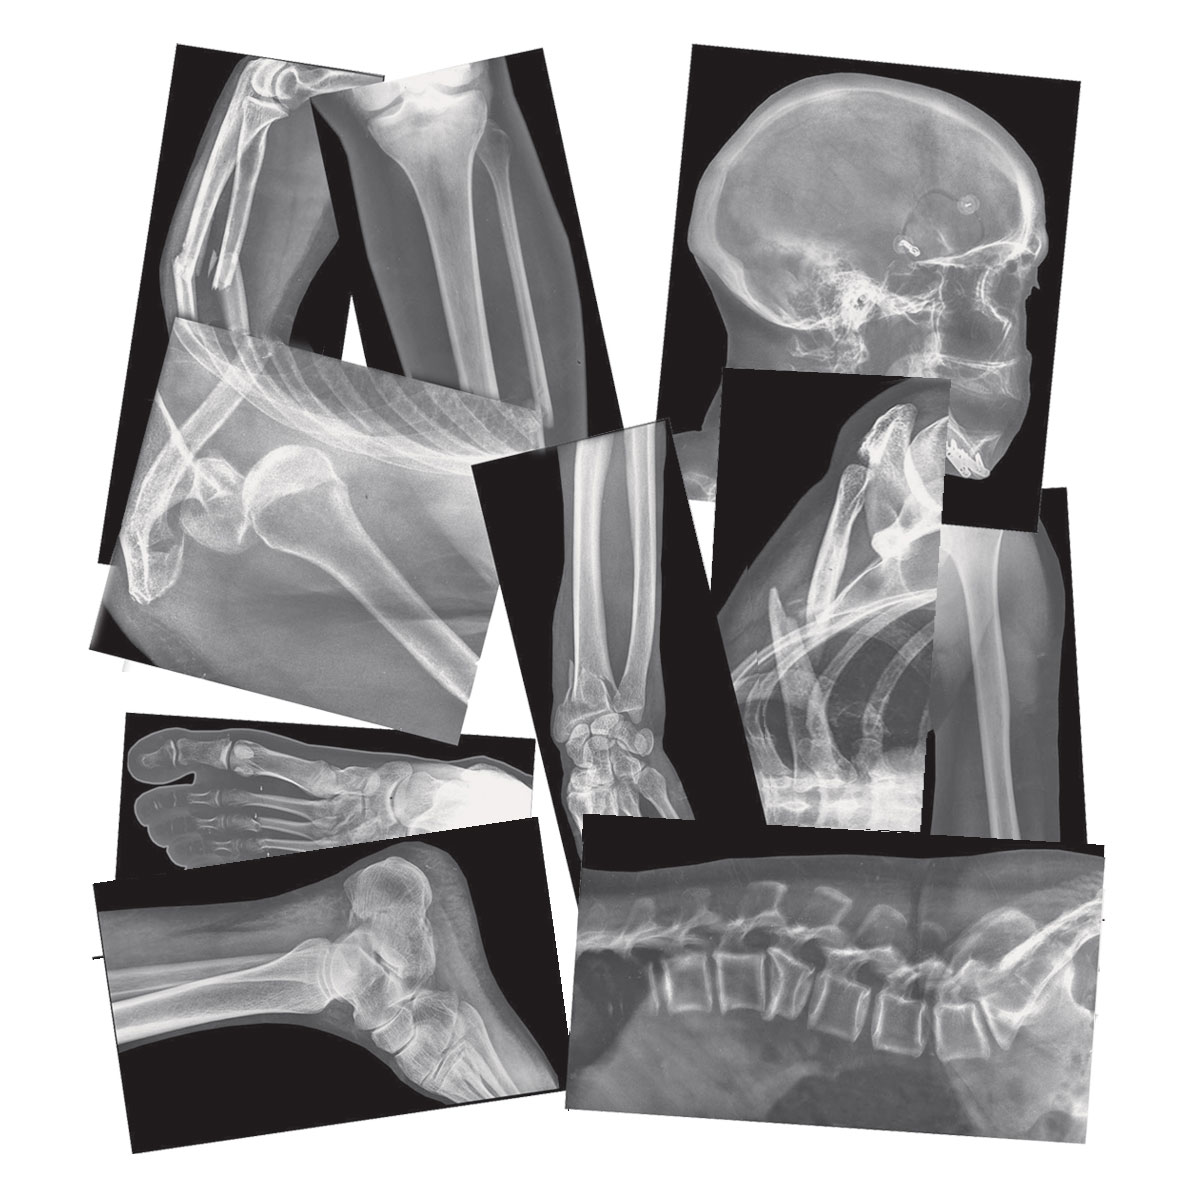 18 Theme/subject: Radiology Skill Learning: Radiography Roylco Human X-ray 